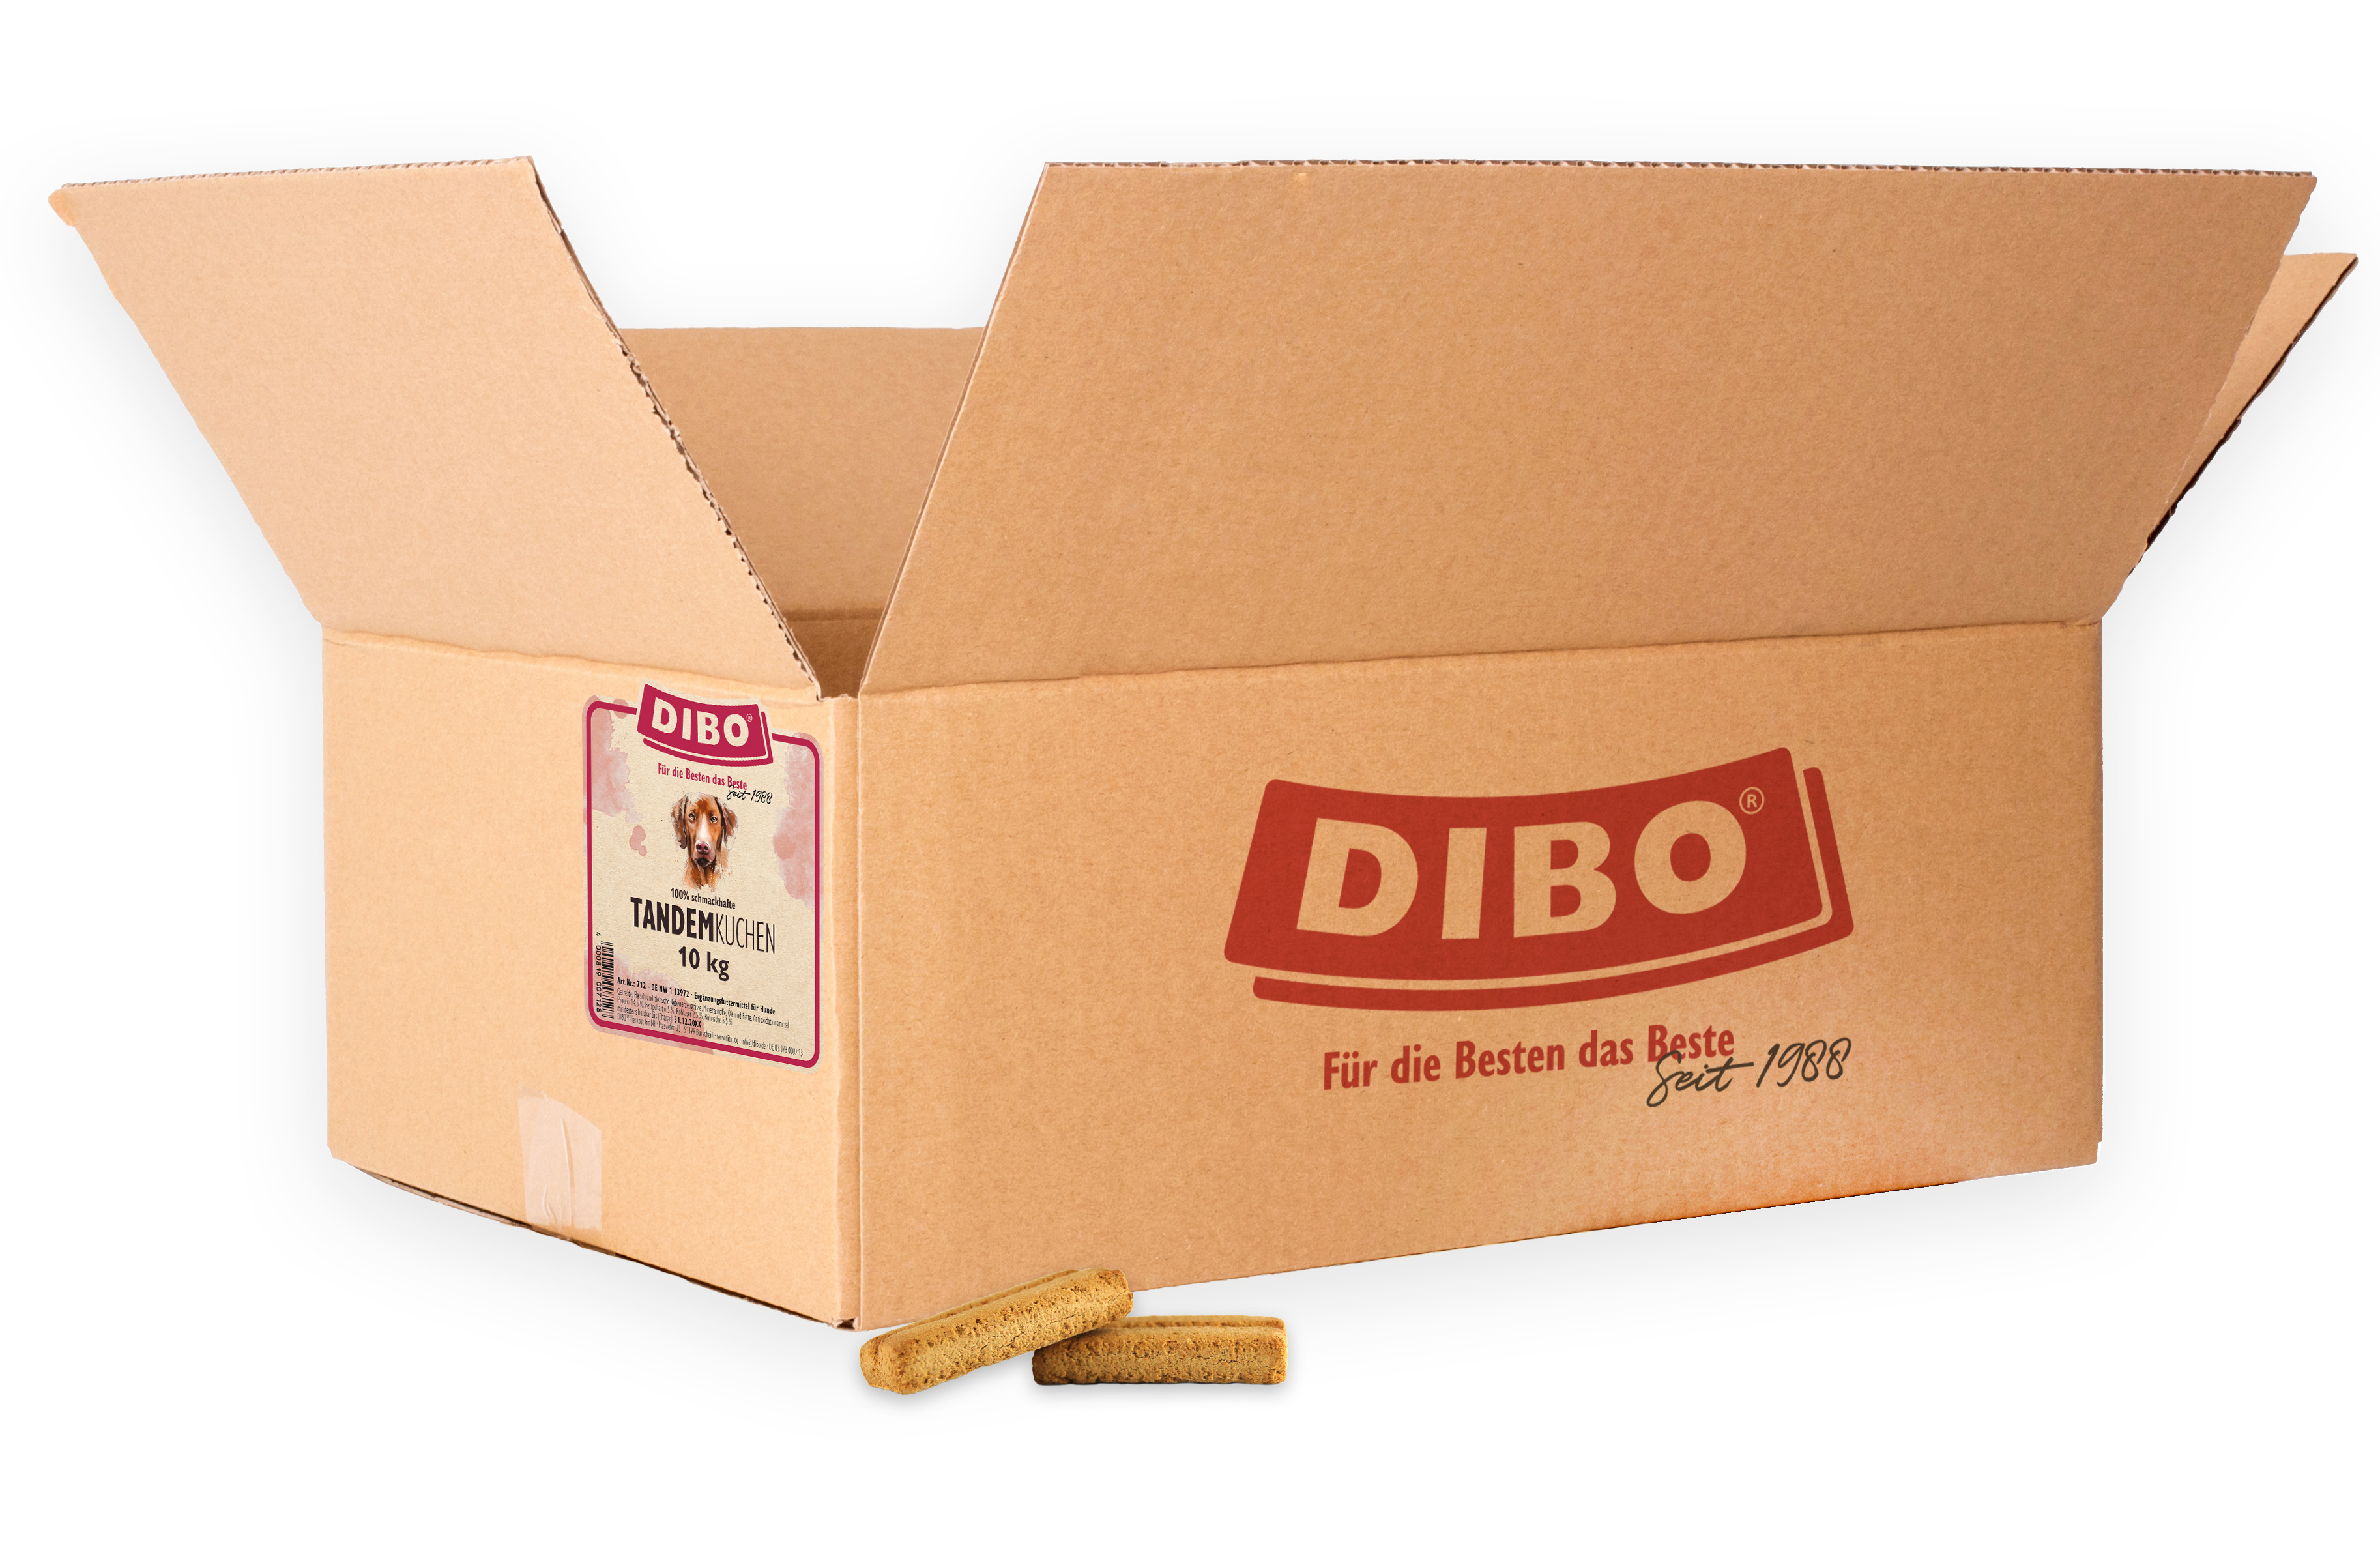 DIBO Tandem-Kuchen, 10kg-Karton